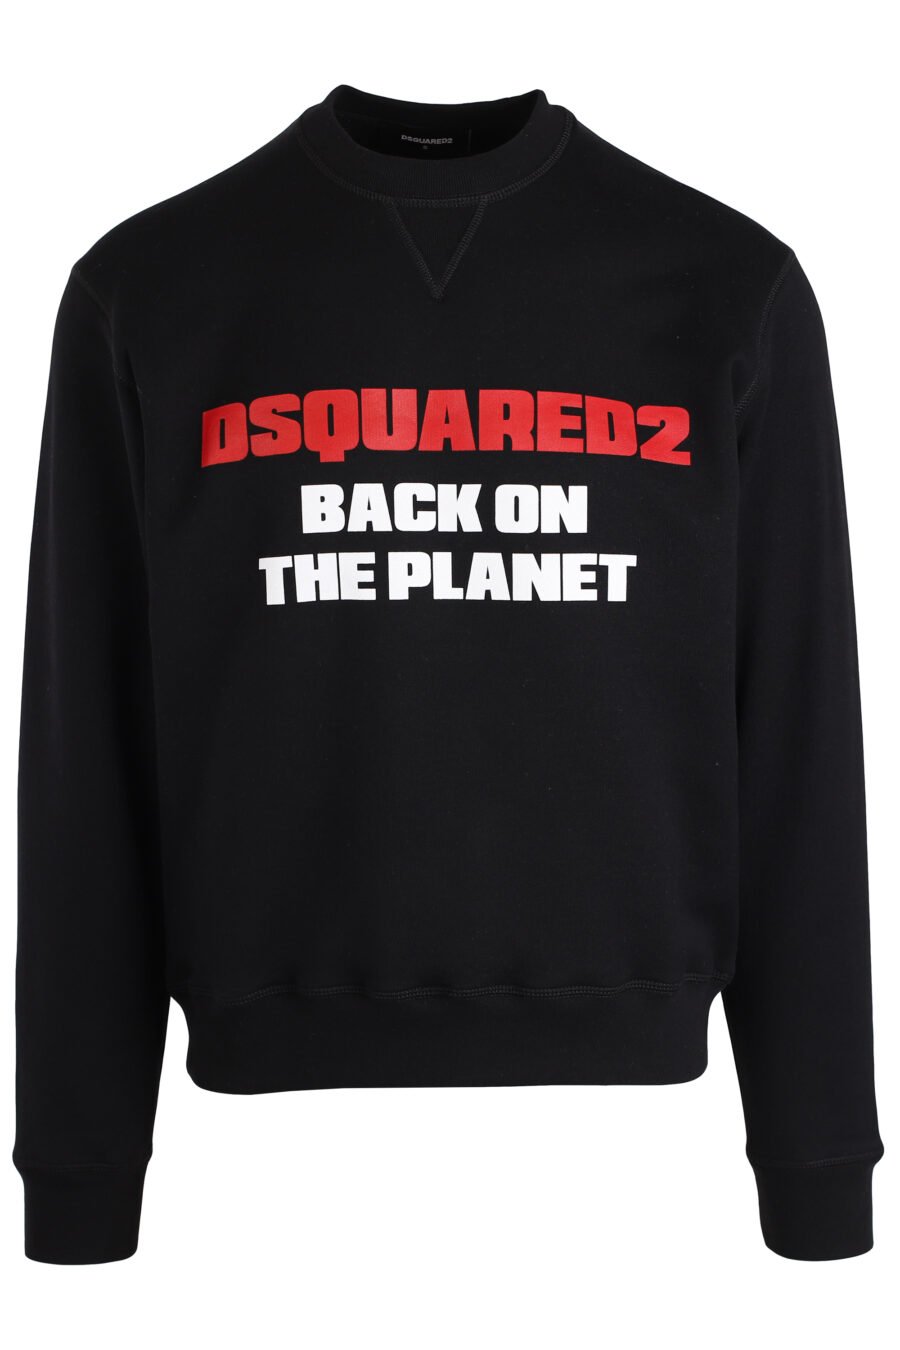 Black "back on the planet" sweatshirt - IMG 3969